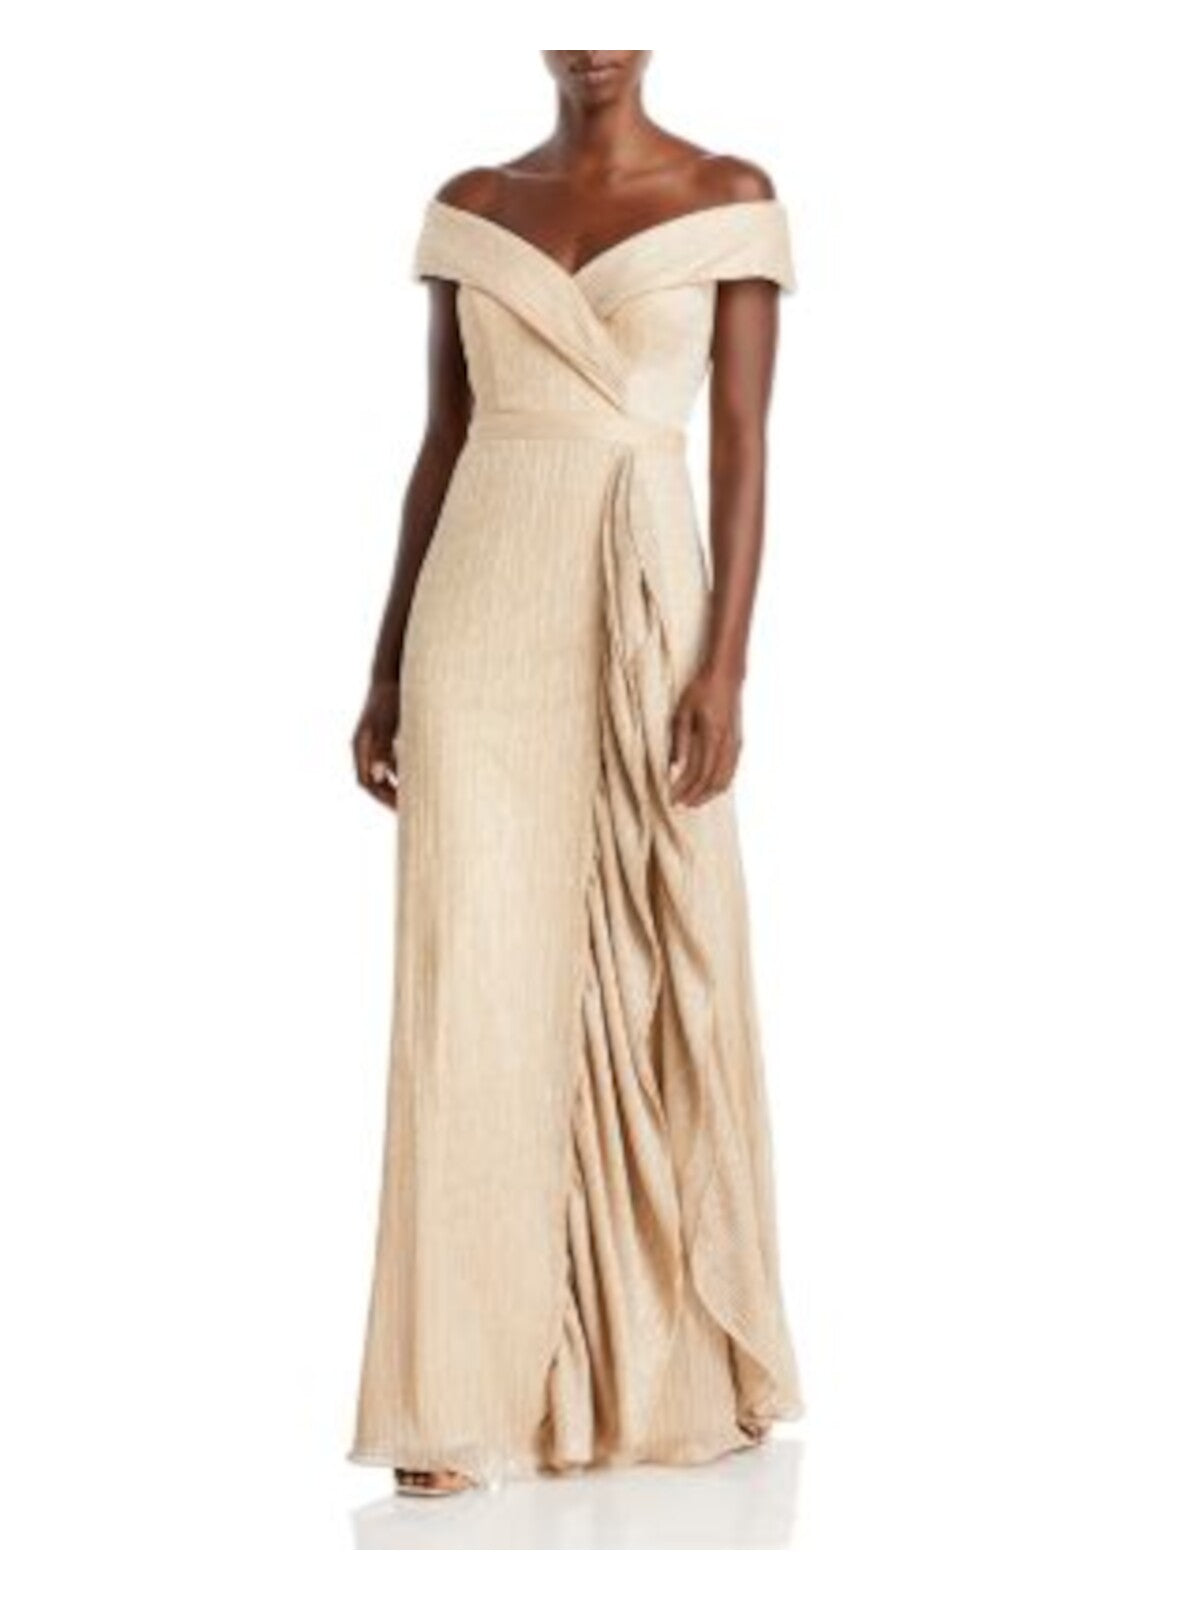 AQUA FORMAL Womens Gold Ruffled Zippered Lined Short Sleeve Off Shoulder Full-Length Evening Gown Dress 6